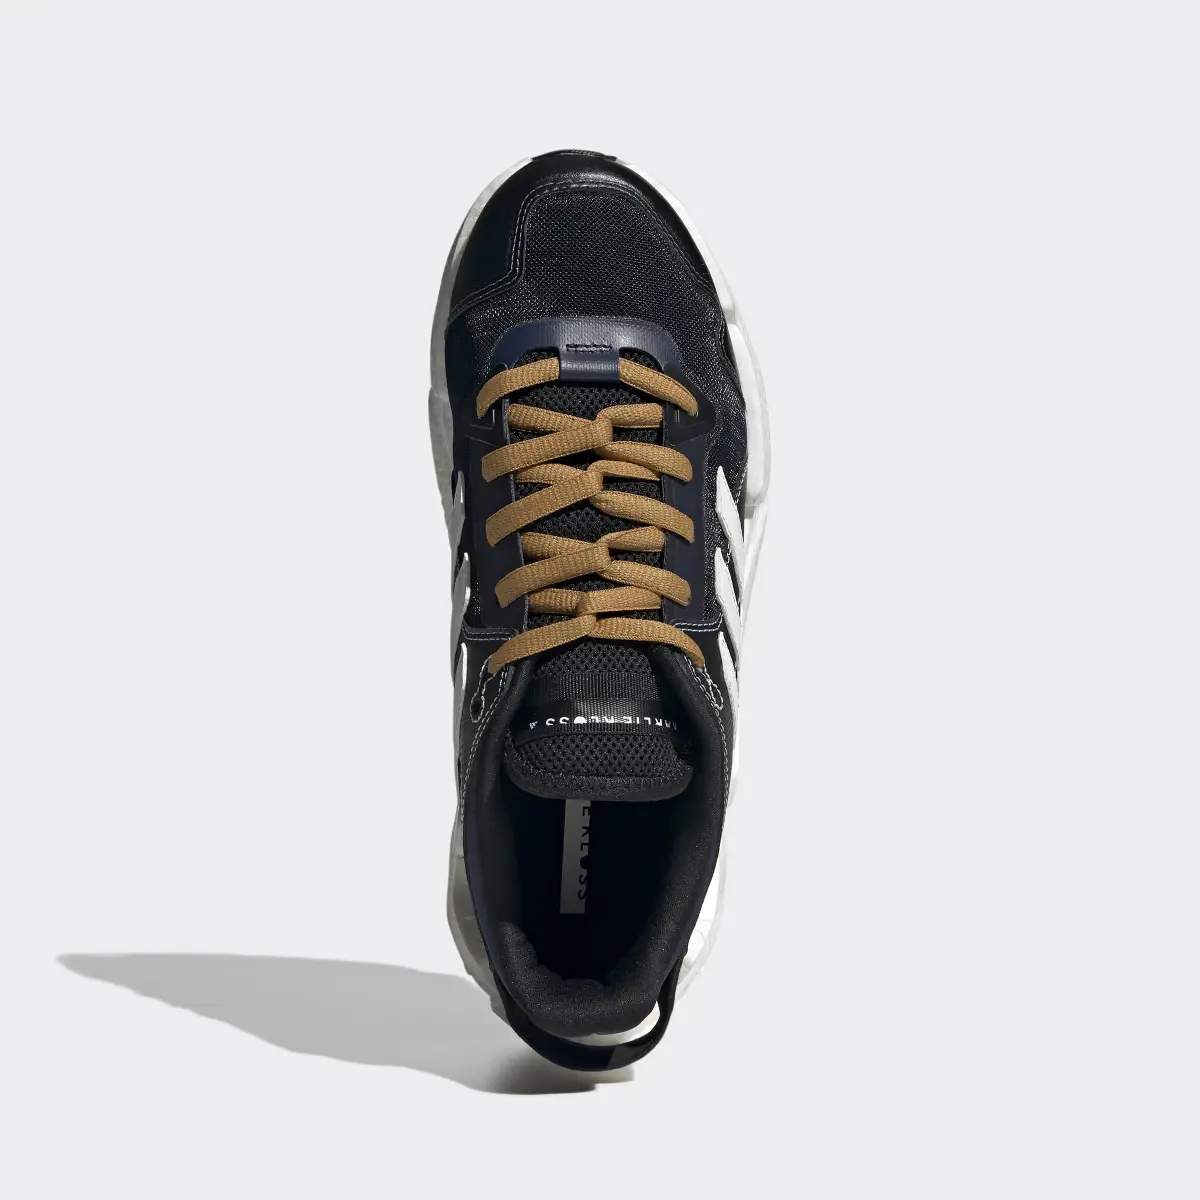 Adidas Chaussure Karlie Kloss X9000. 3